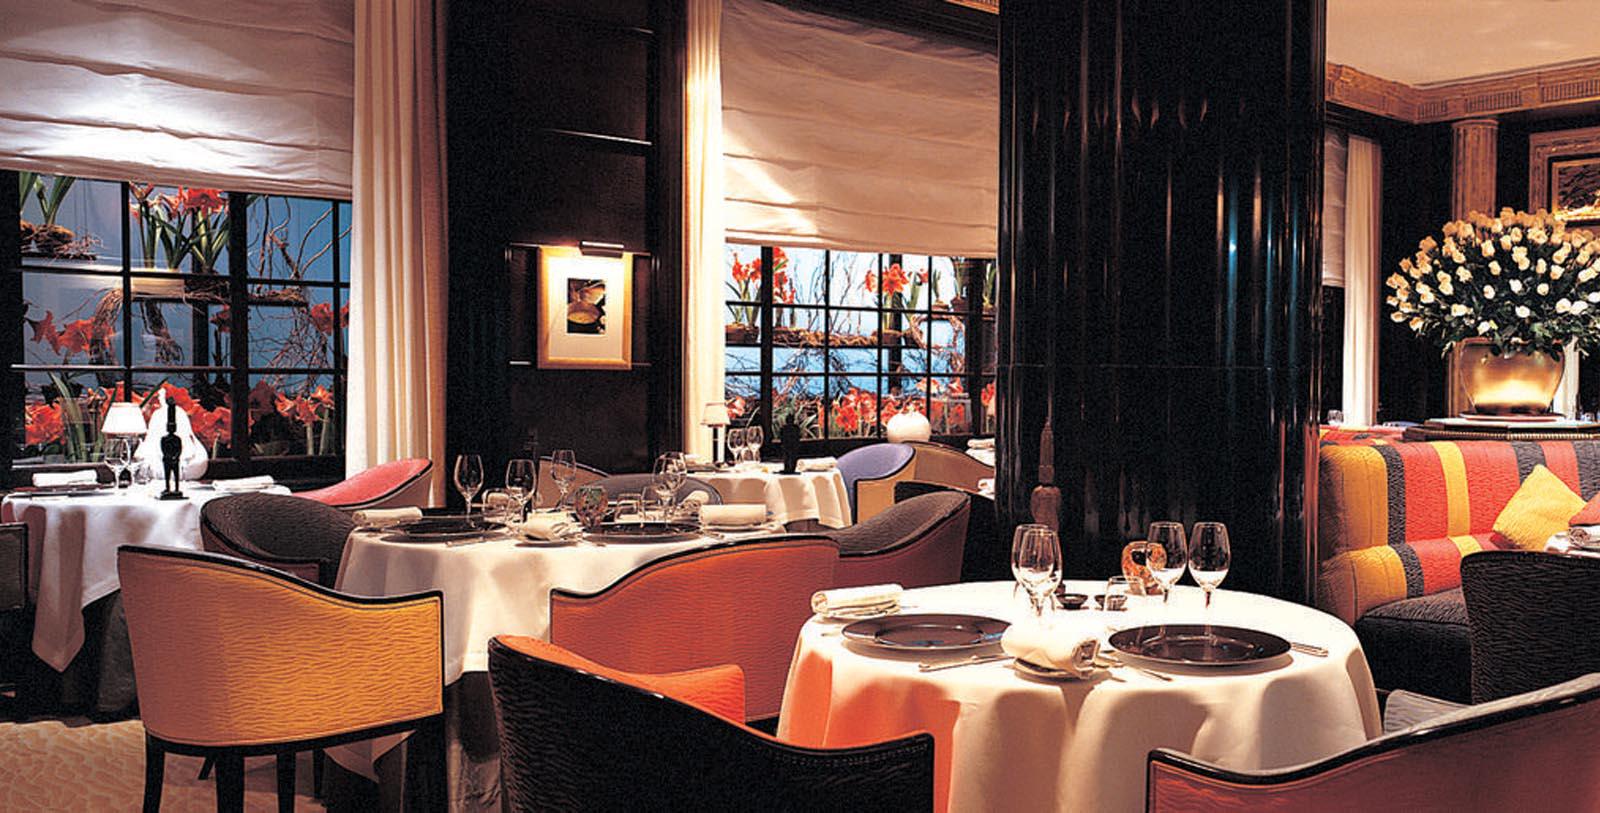 Image of Southgate Bar & Restaurant, JW Marriott Essex House New York, New York, 1931, Member of Historic Hotels of America, Taste